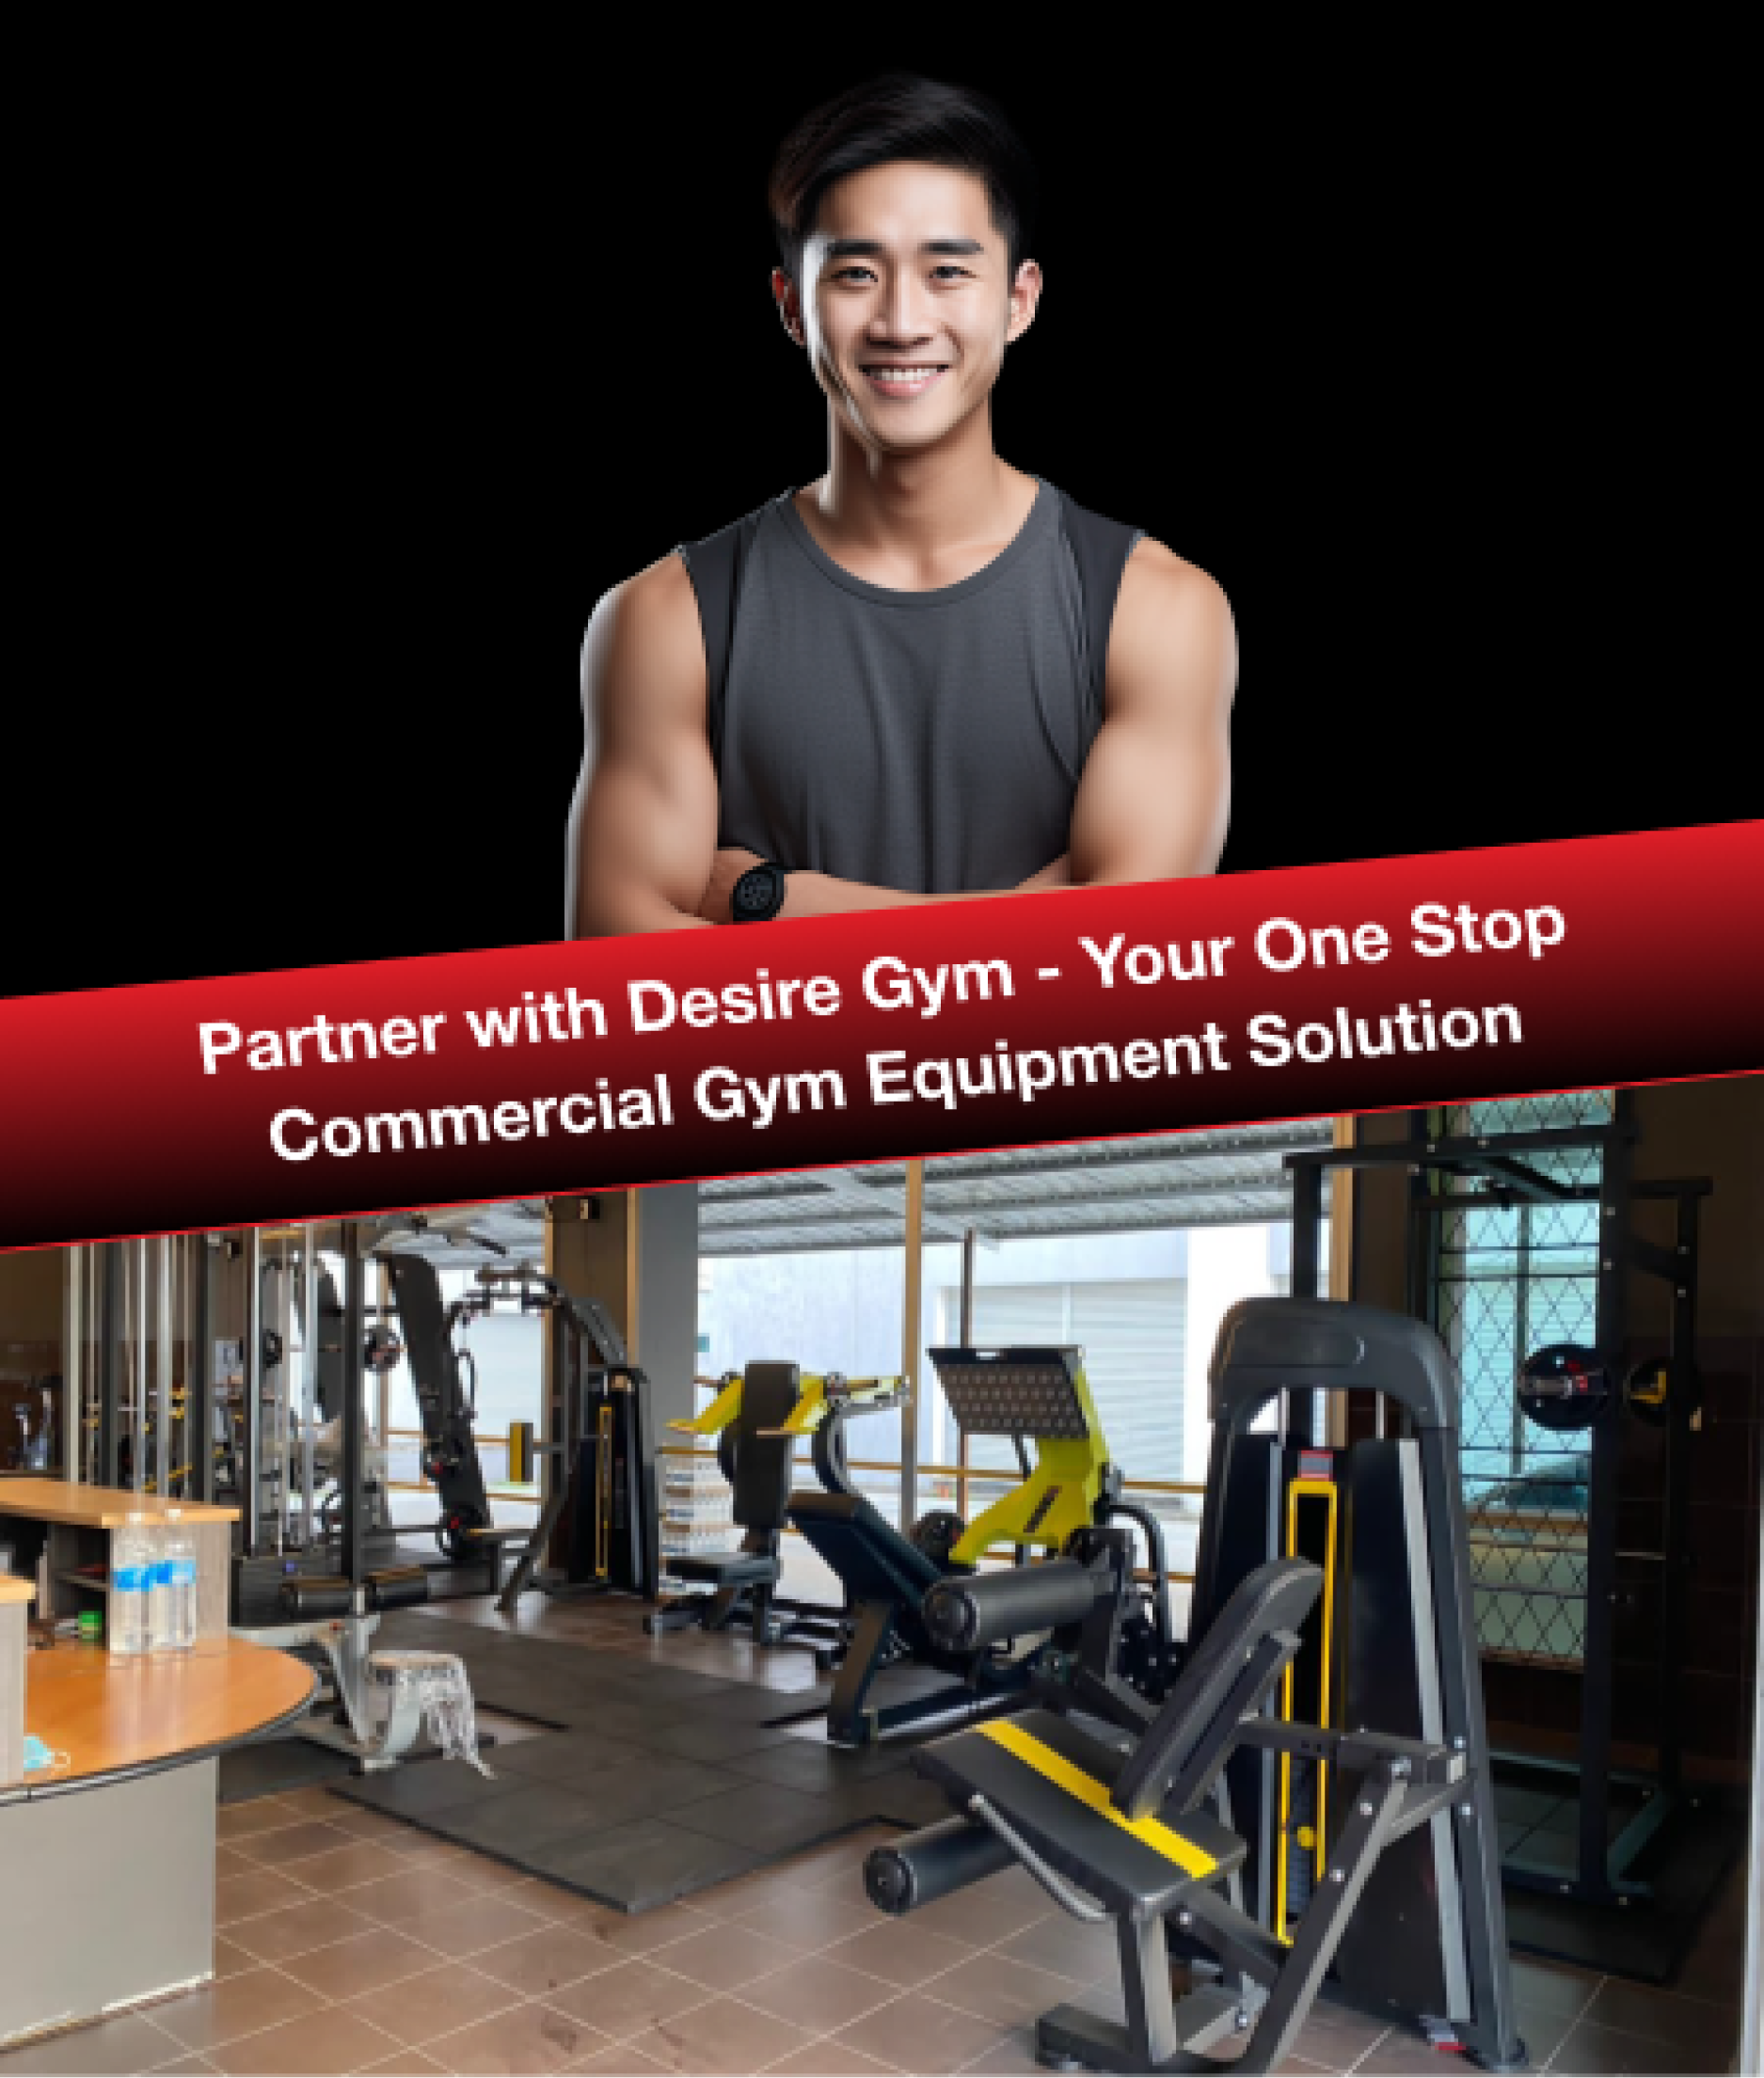 Commercial GYM Equipment, Desire Gym